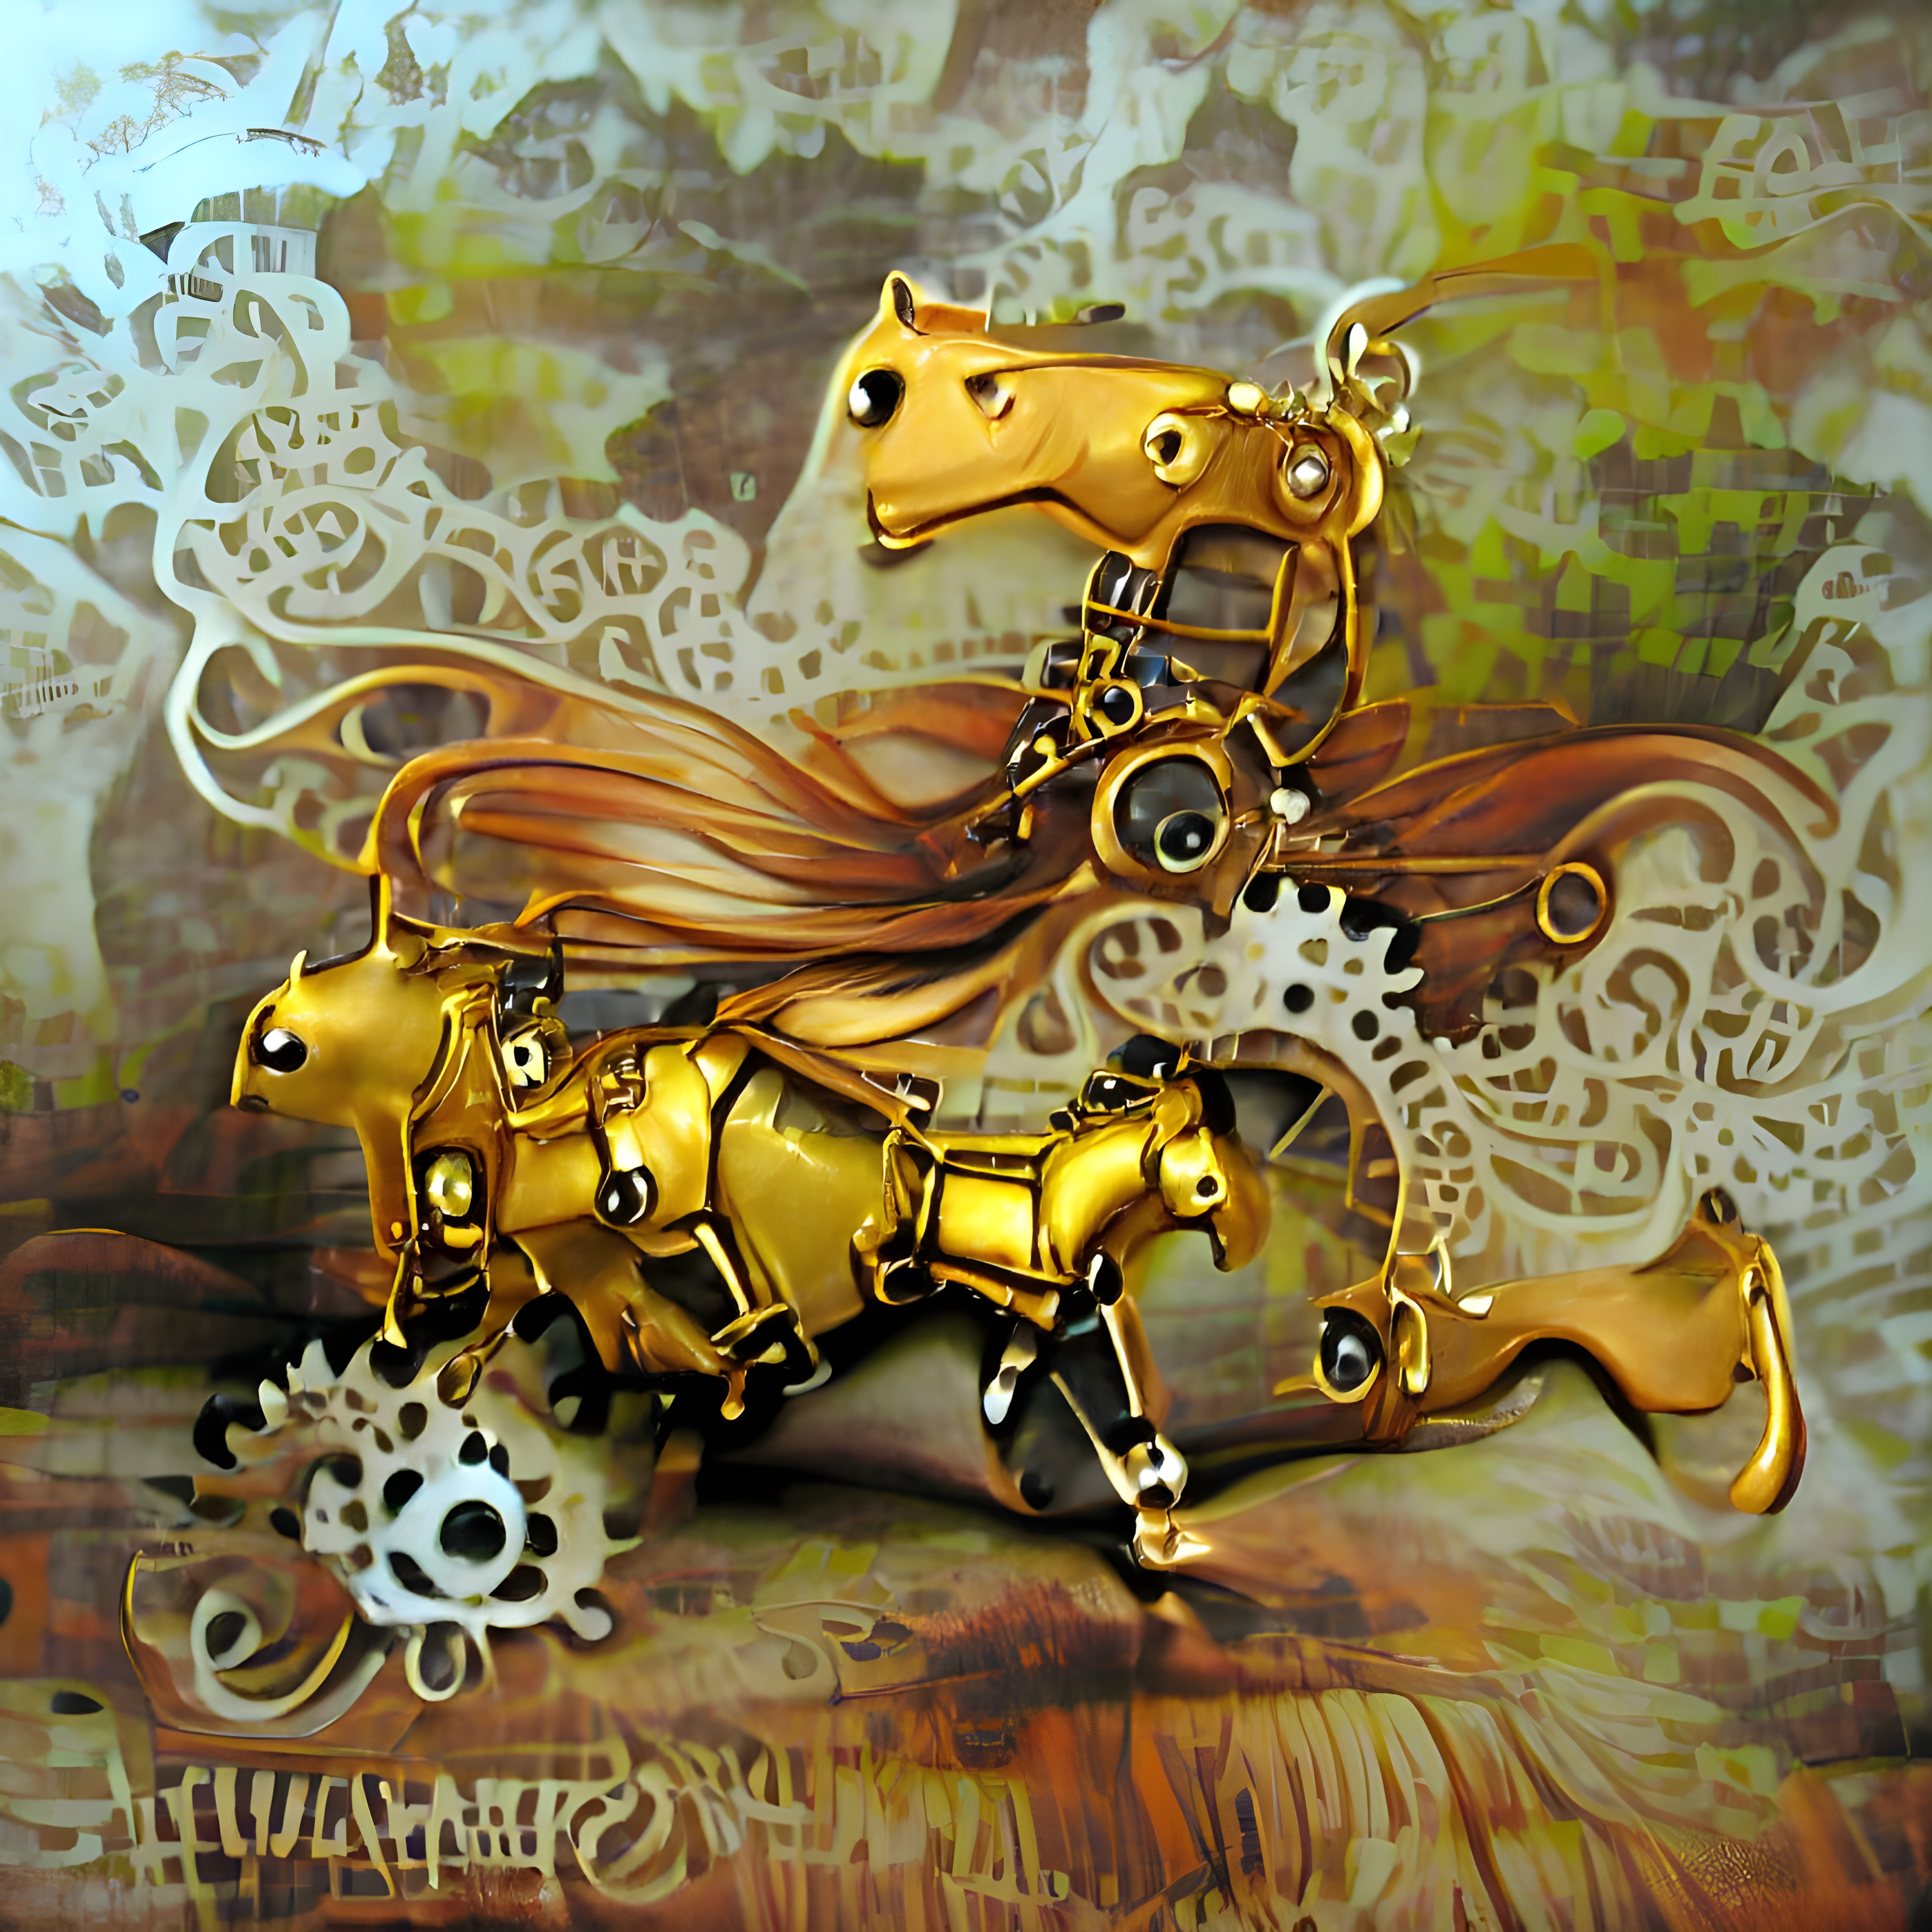 The Creative Horses